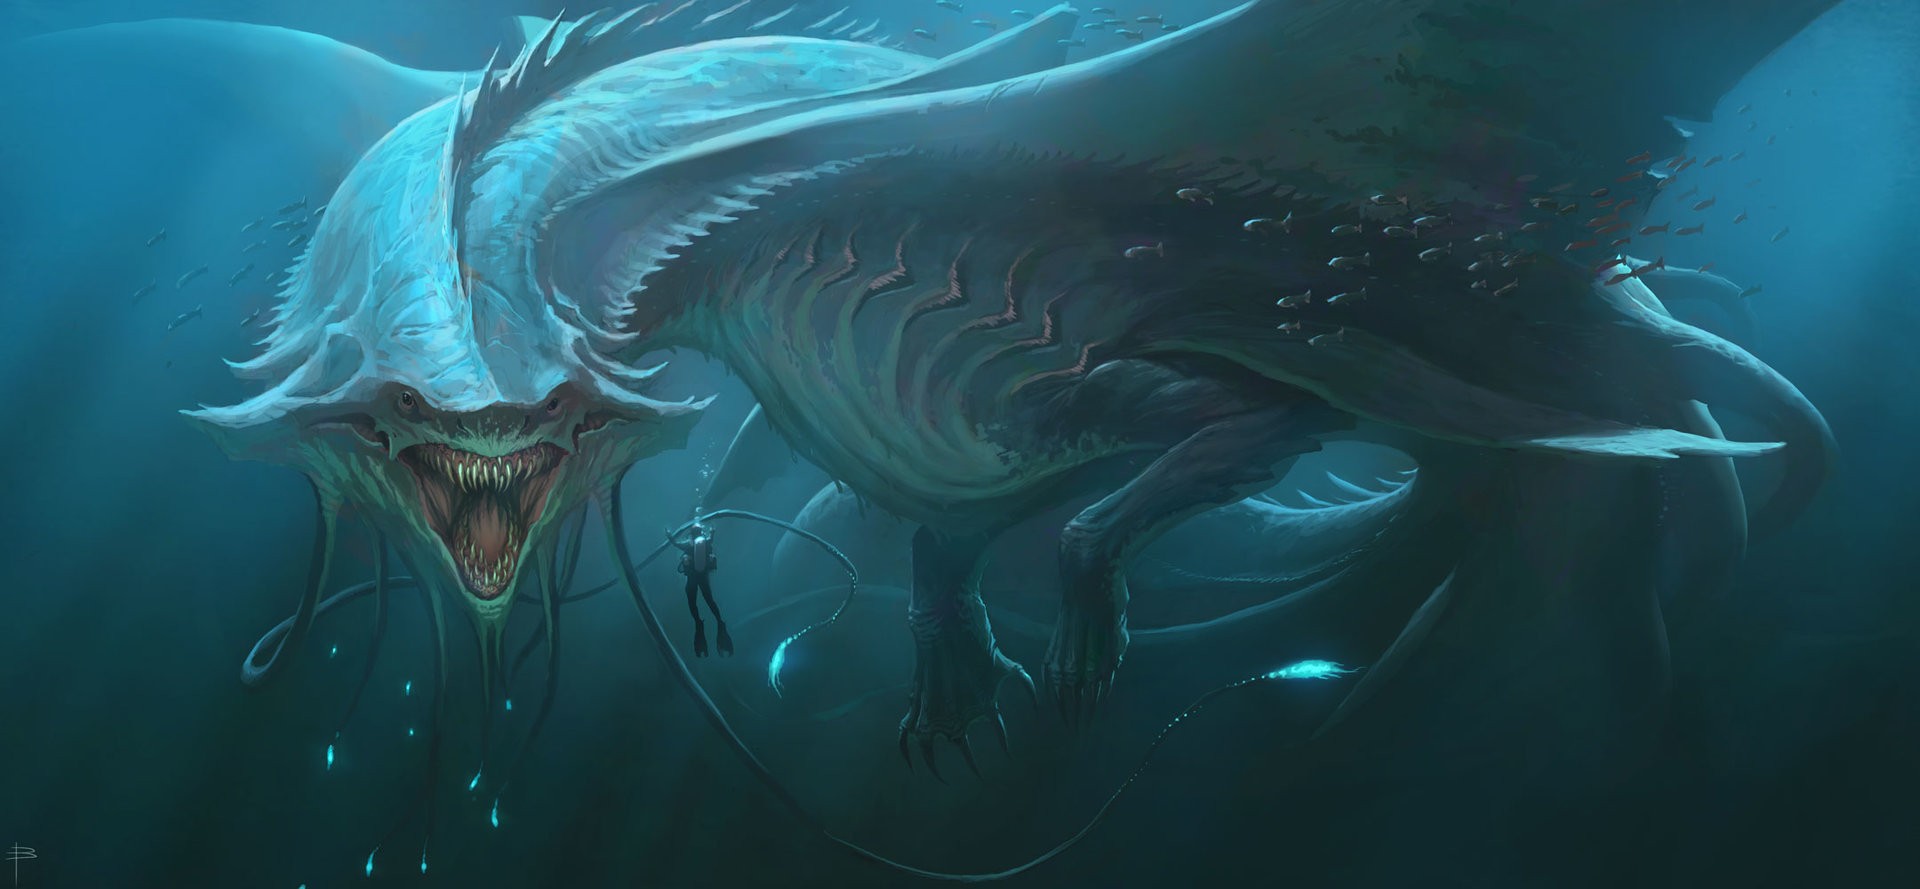 Digital Art Fantasy Art Creature Sea Monsters Underwater Sea Men Divers Fangs Bubbles Tail Fish Turq 1920x889